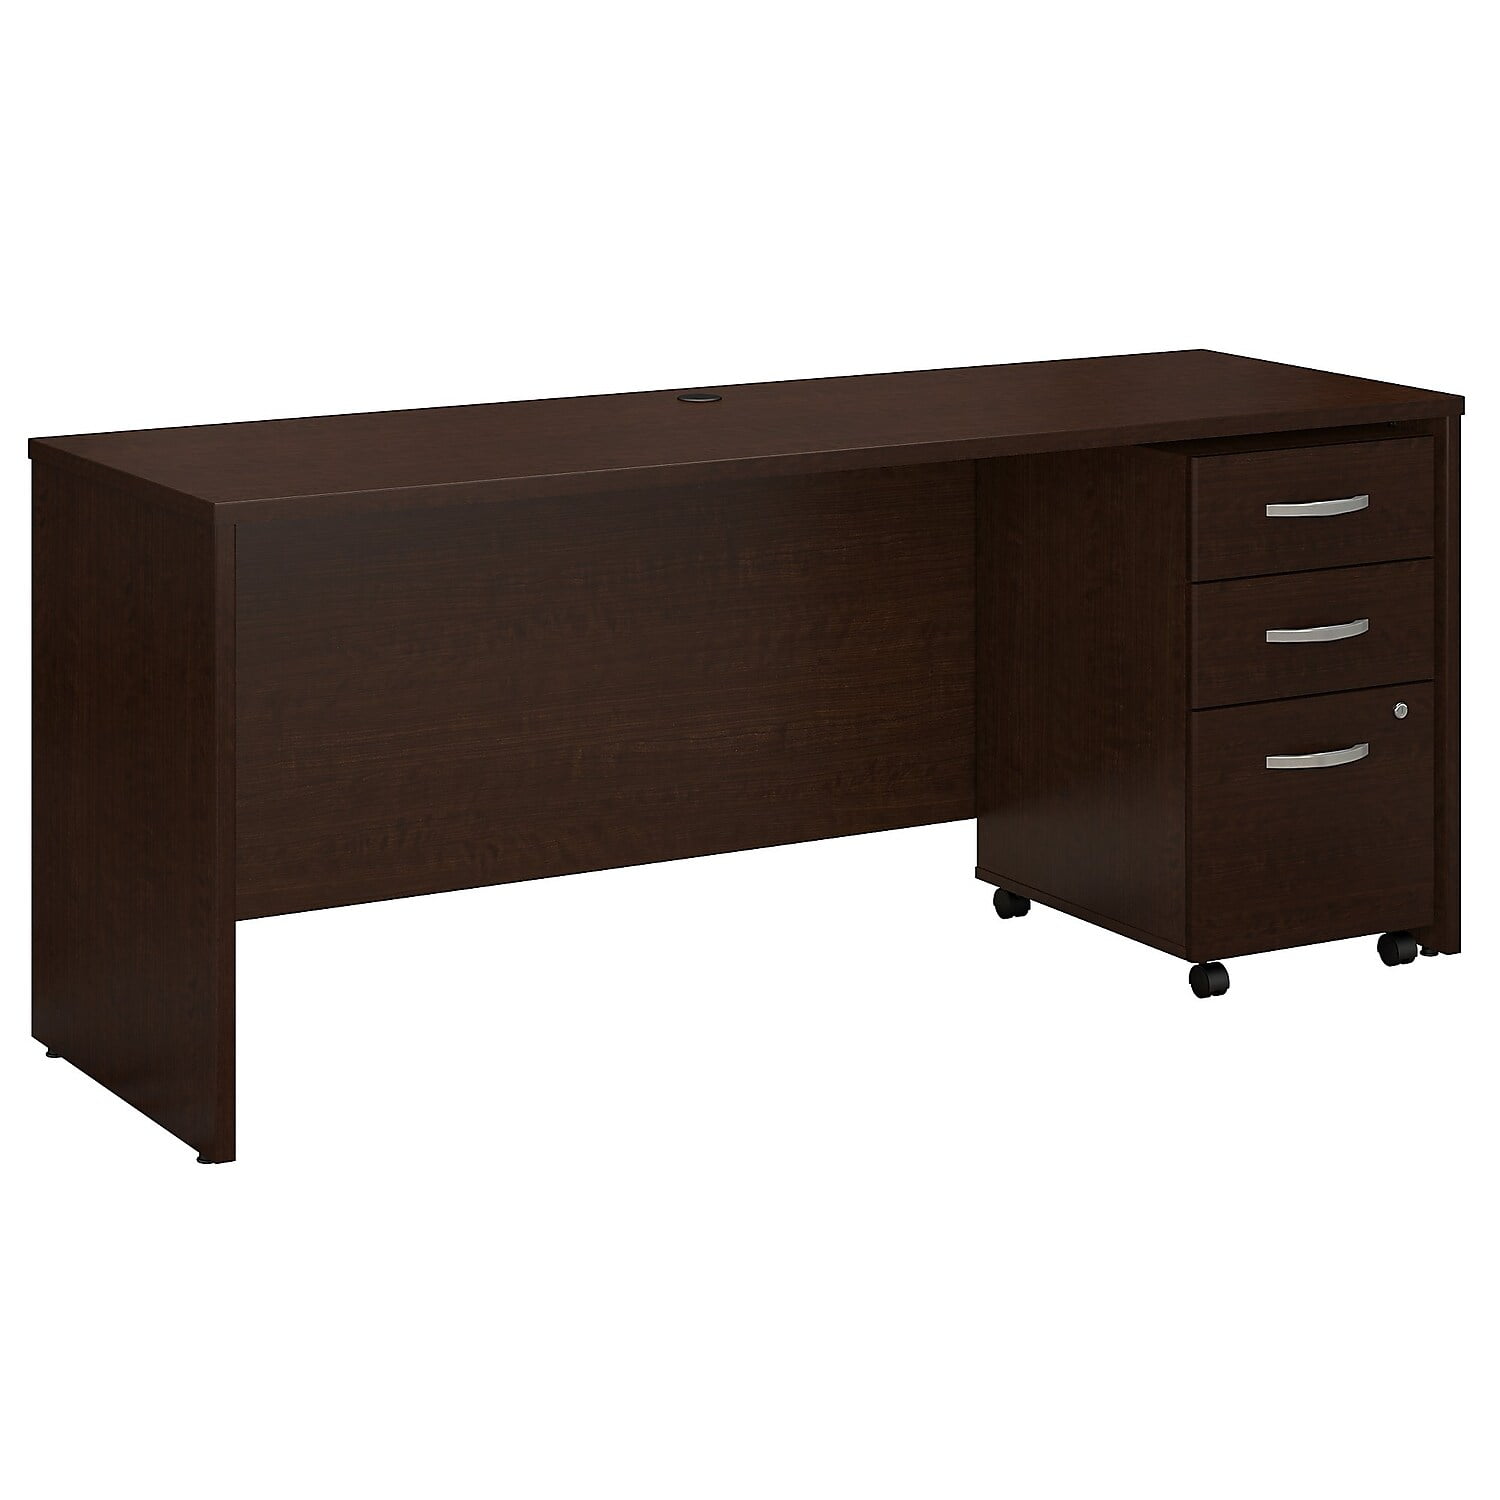 Picture of Bush Business Furniture SRC026MRSU 72 x 24 in. Series C Office Desk with Mobile File Cabinet - Mocha Cherry